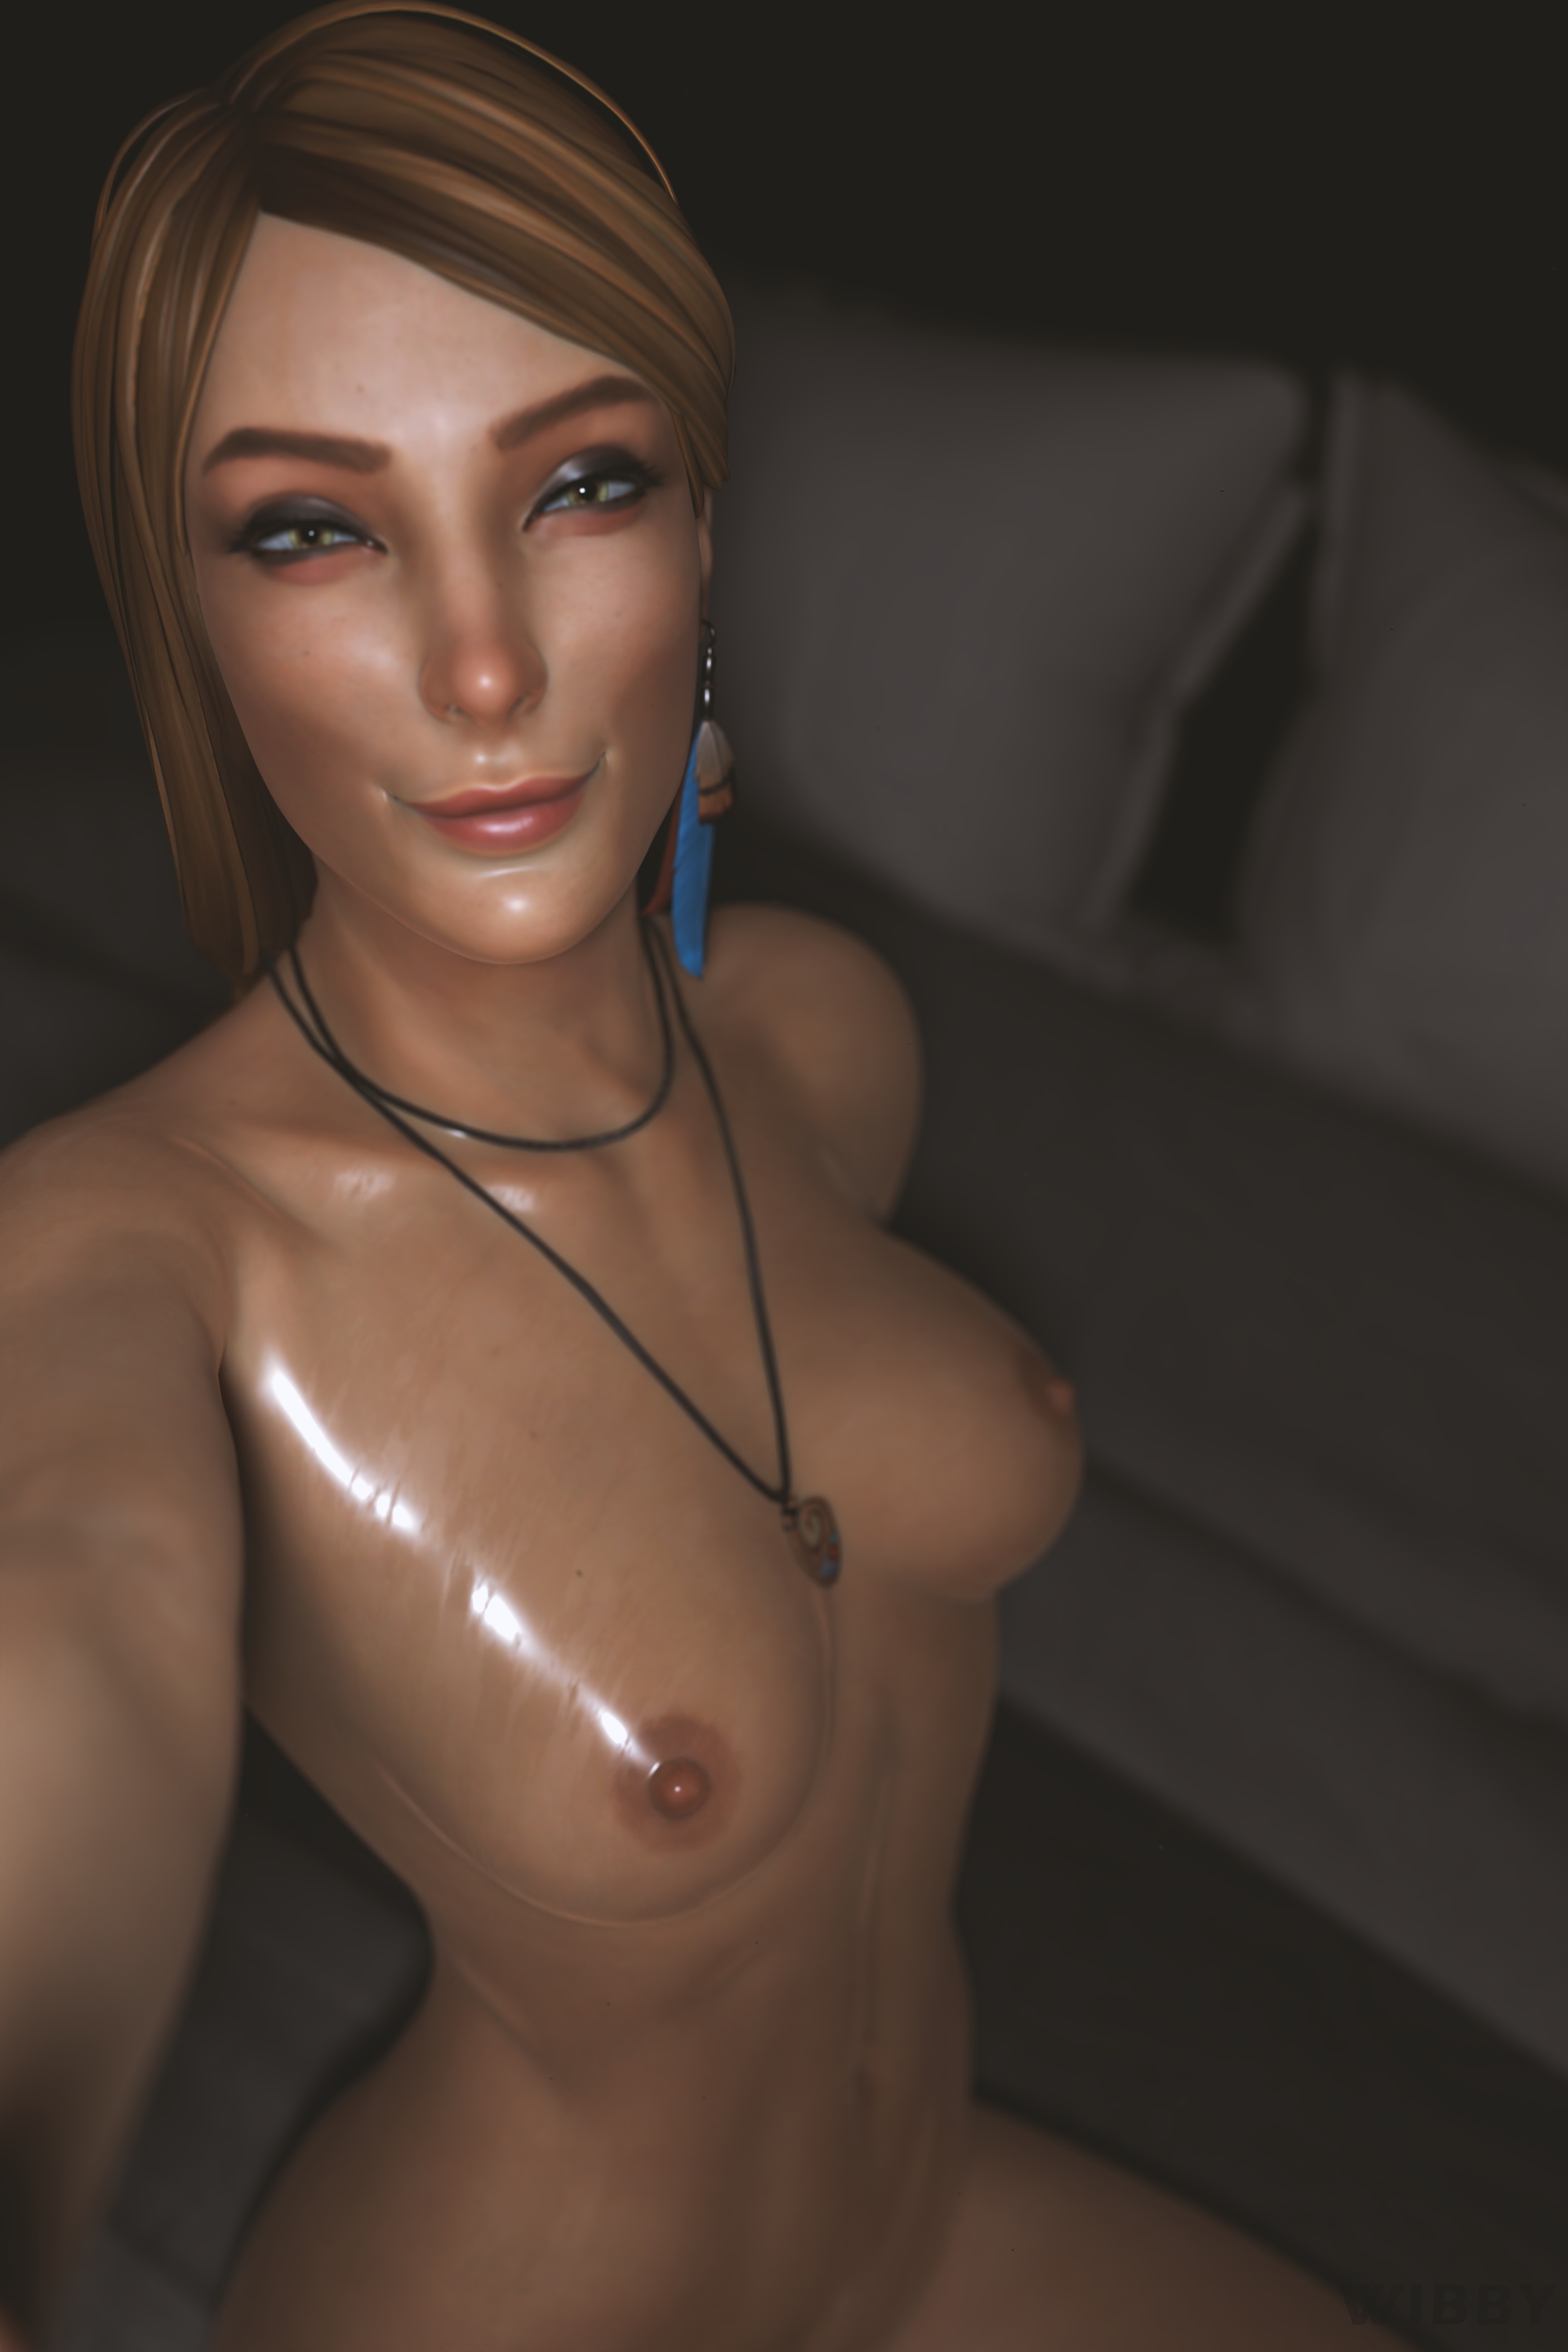 𝑺𝒆𝒆 𝒕𝒉𝒆𝒔𝒆 𝒆𝒚𝒆𝒔 𝒔𝒐 𝒈𝒓𝒆𝒆𝒏 𝑰 𝒄𝒂𝒏 𝒔𝒕𝒂𝒓𝒆 𝒇𝒐𝒓 𝒂 𝒕𝒉𝒐𝒖𝒔𝒂𝒏𝒅 𝒚𝒆𝒂𝒓𝒔 Rachel Amber Life Is Strange Nude Pinup Sexy Big Breasts Big Tits Nipples Selfie Oiled